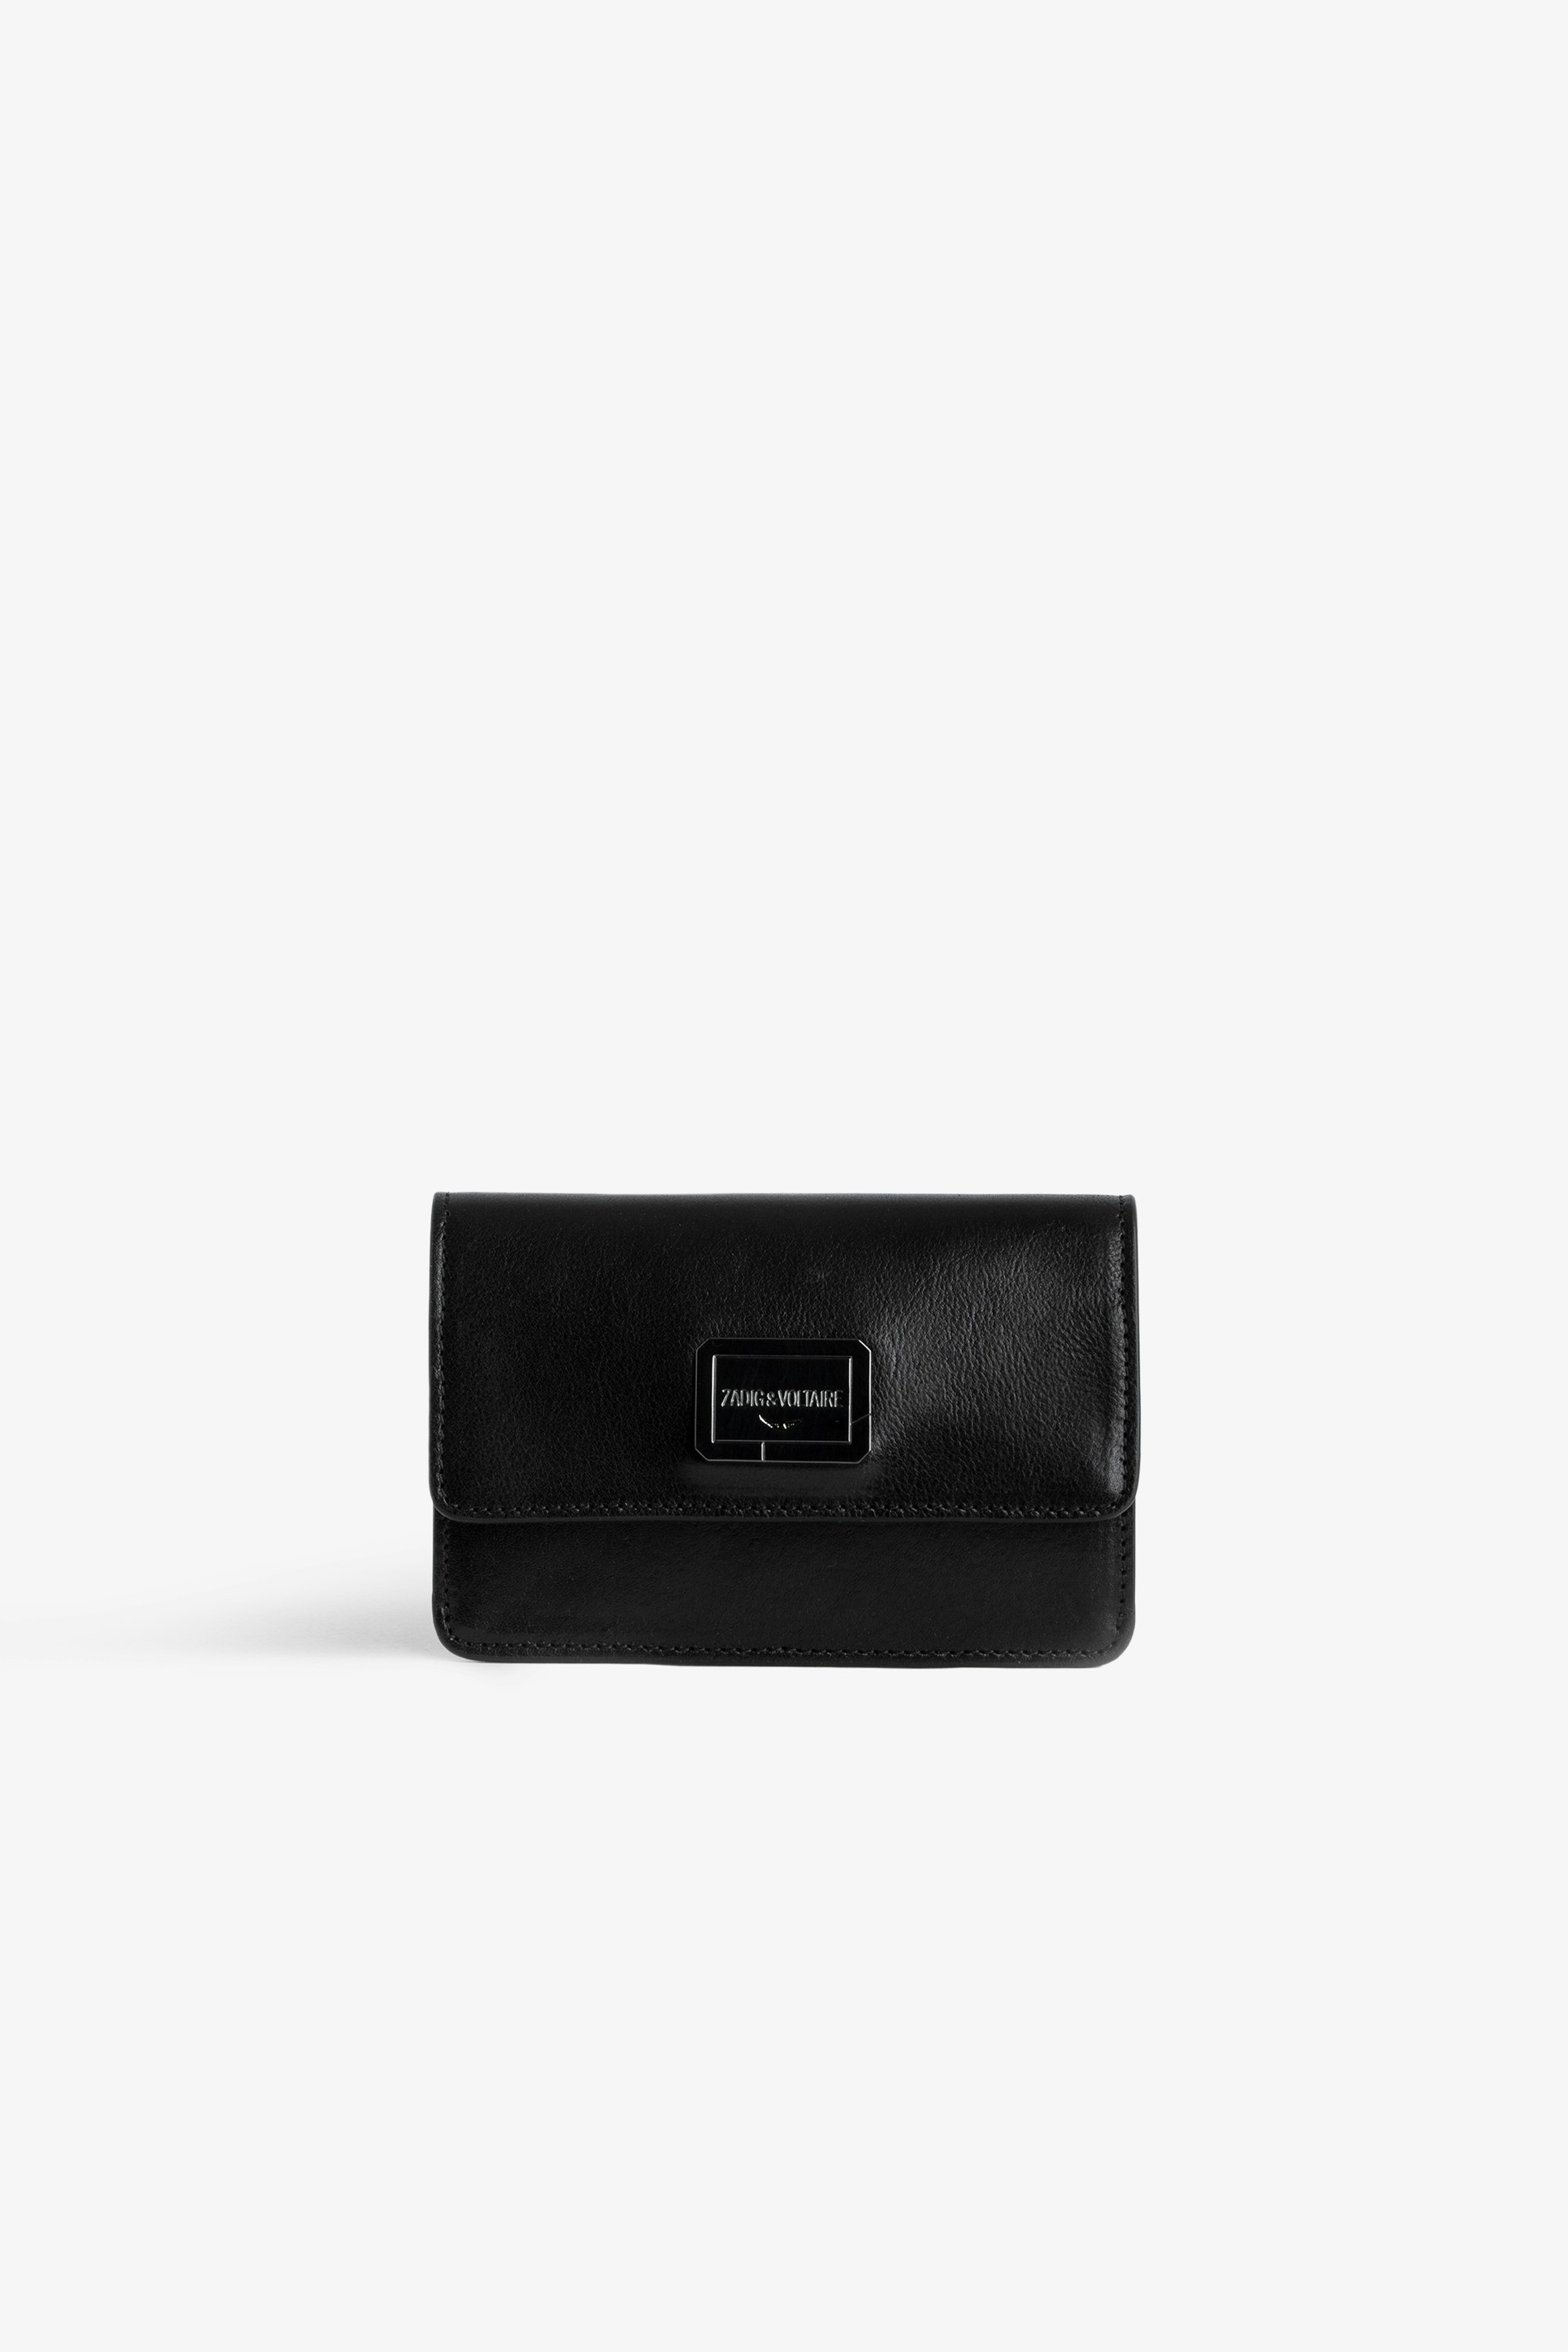 Le Cecilia 財布 Women's black leather wallet with flap